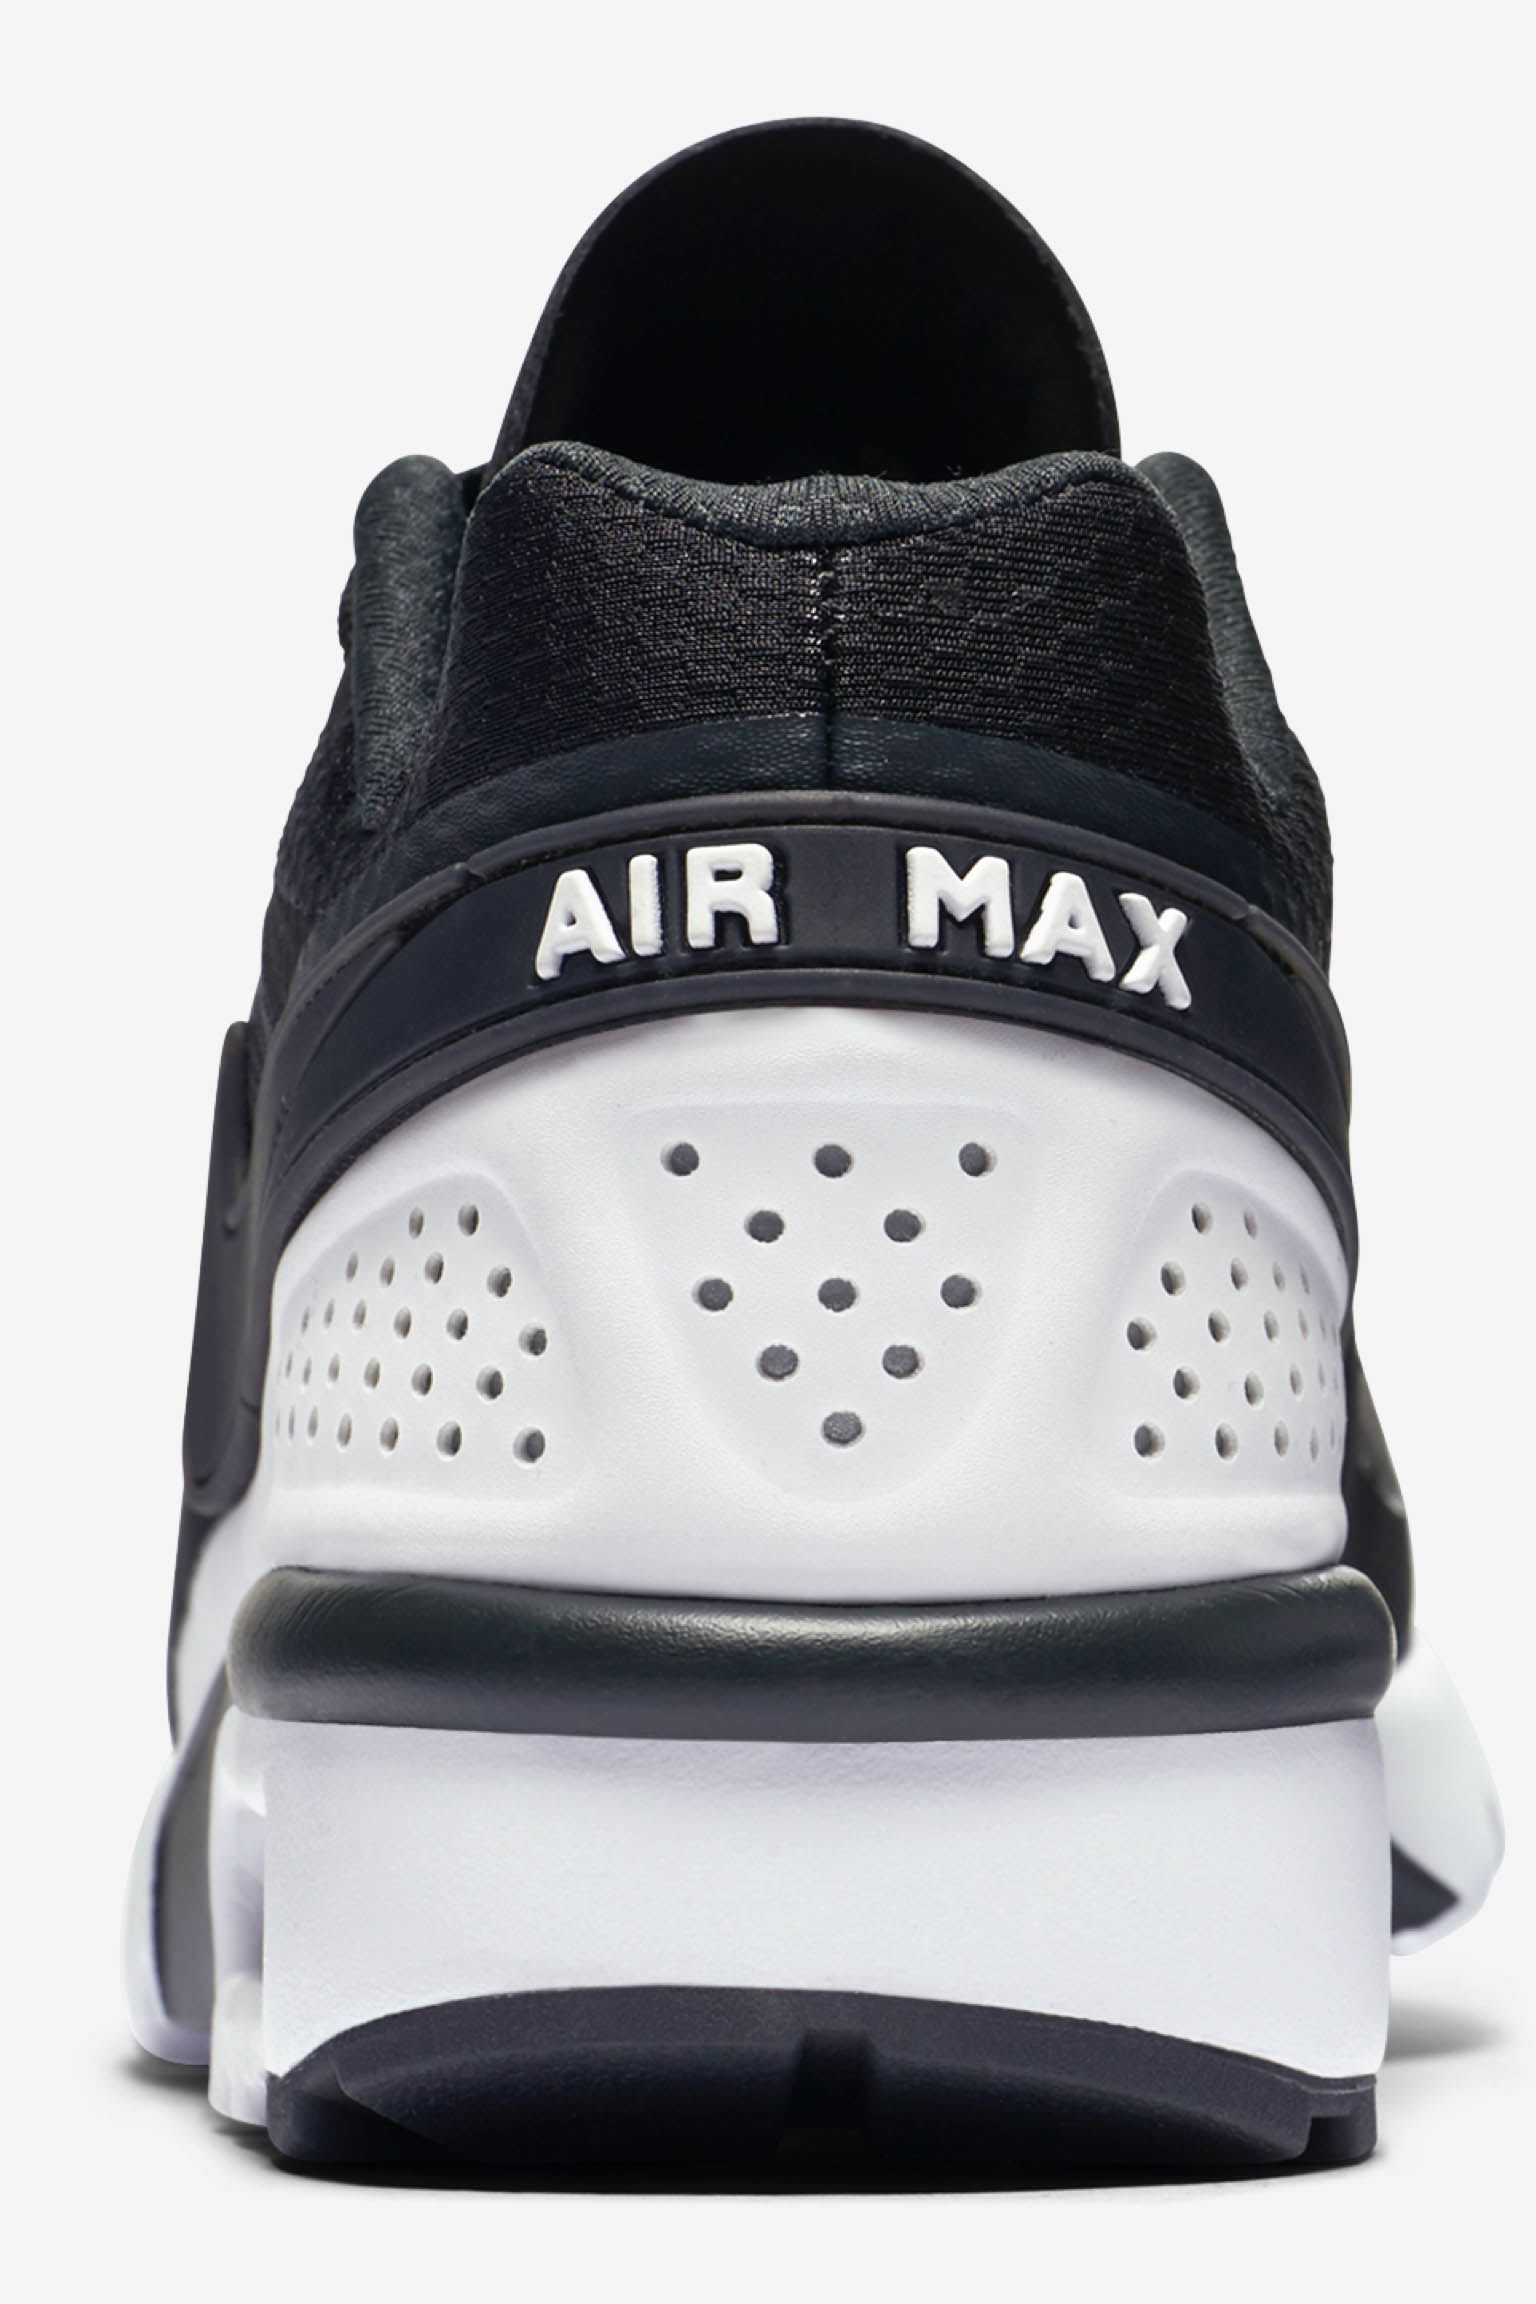 موقد غاز للرحلات والتخييم Nike Air Max BW Ultra 'Black & White' Release Date. Nike SNKRS موقد غاز للرحلات والتخييم